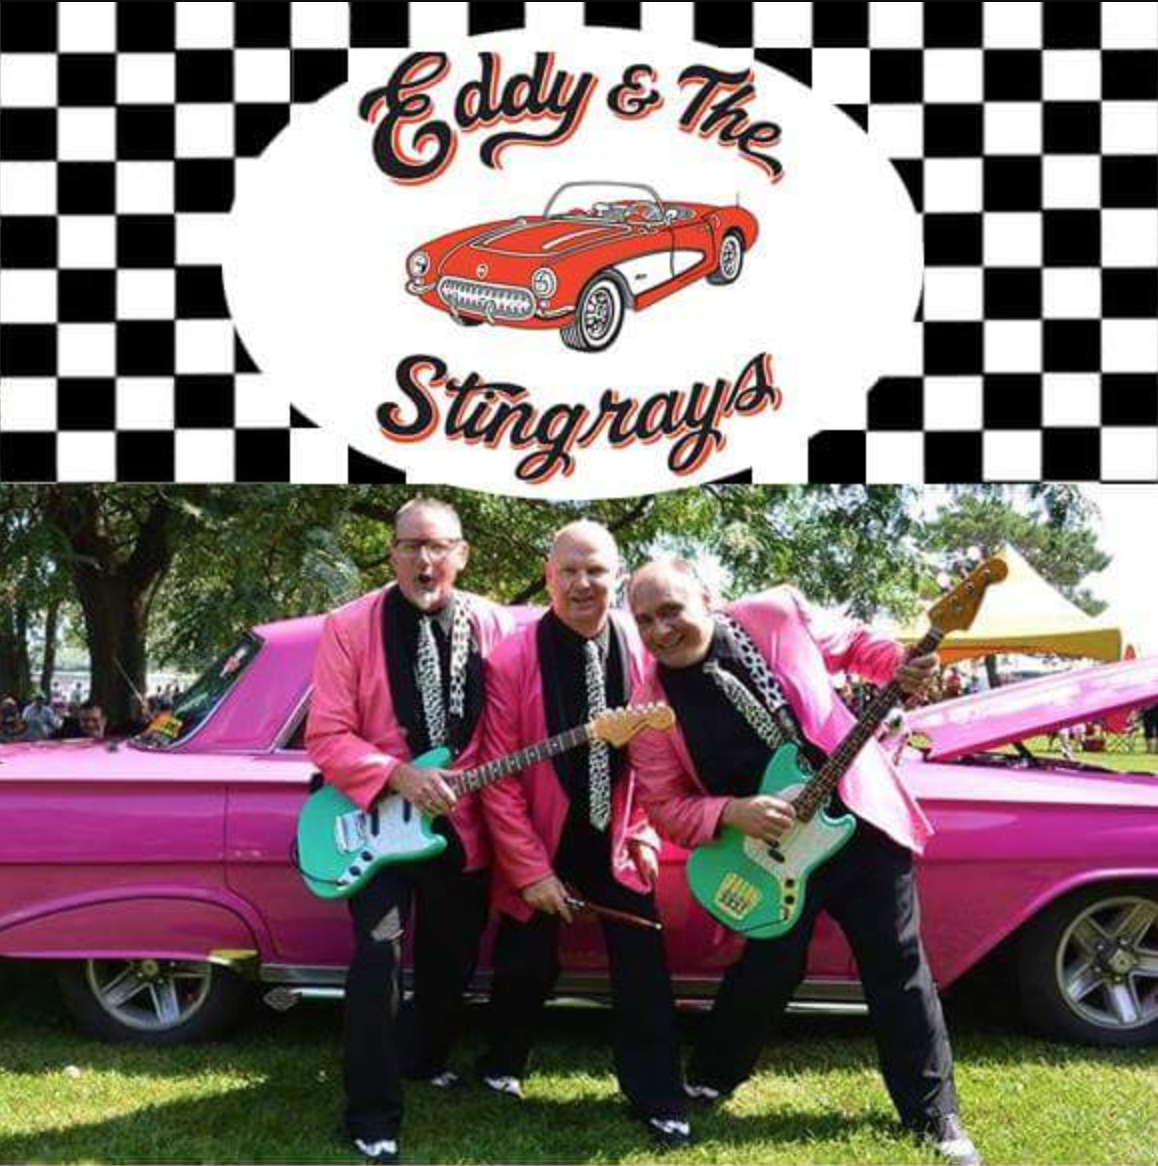 Eddy and the Stingrays